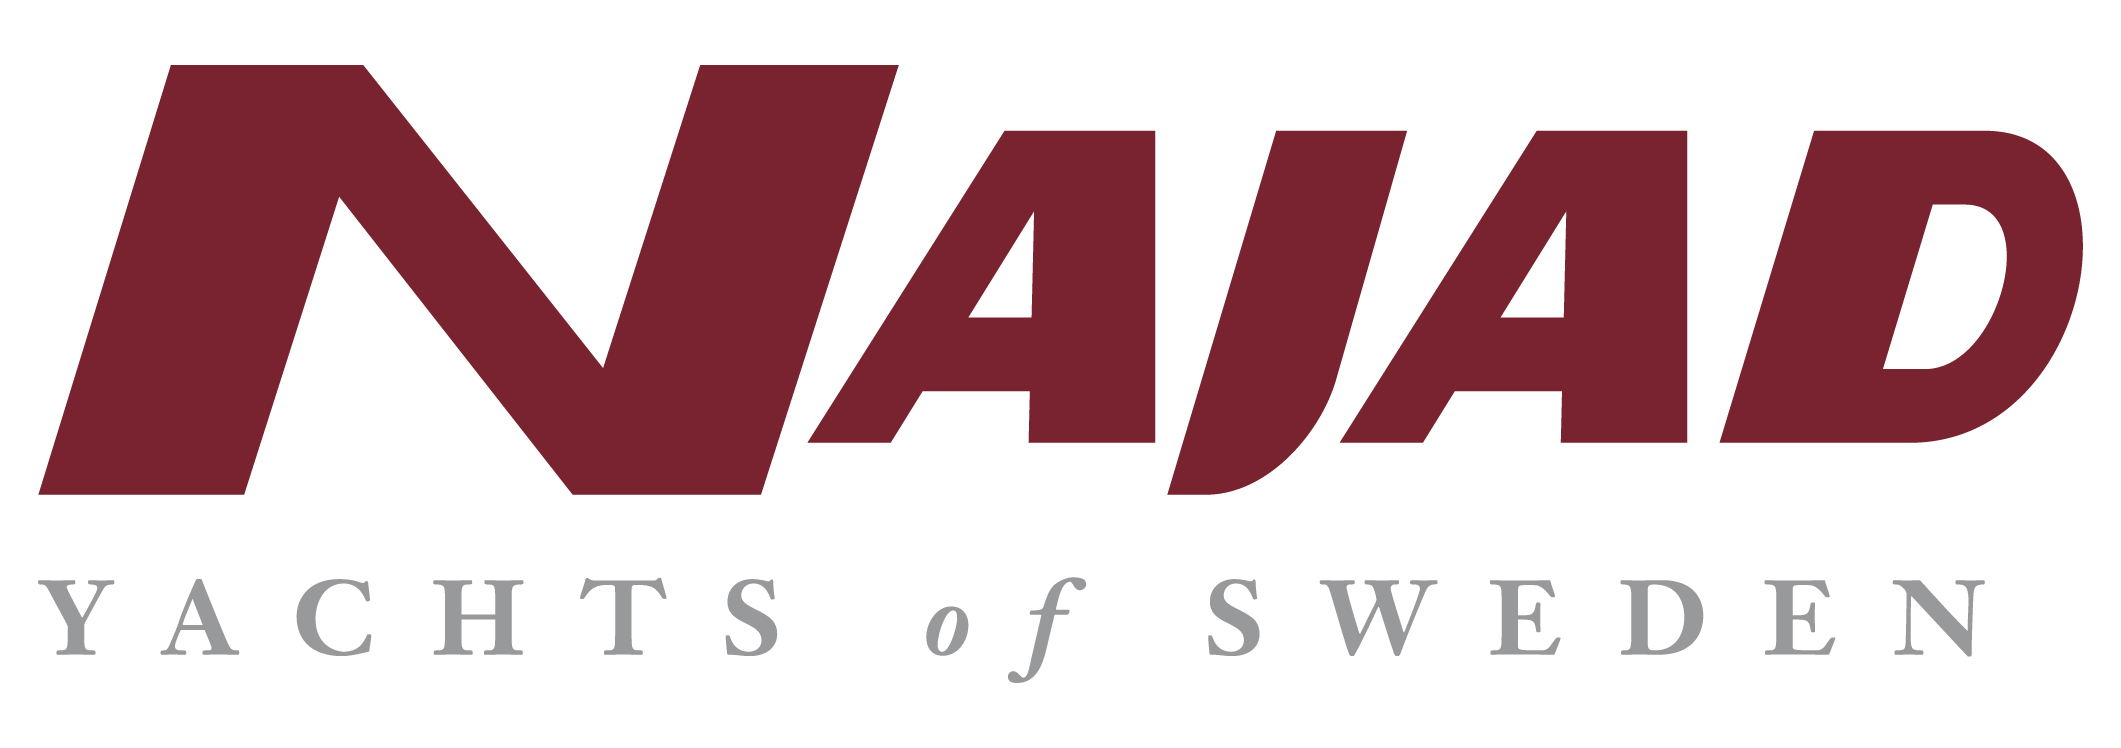 Najad Yachts of Sweden Logo POS copy 1